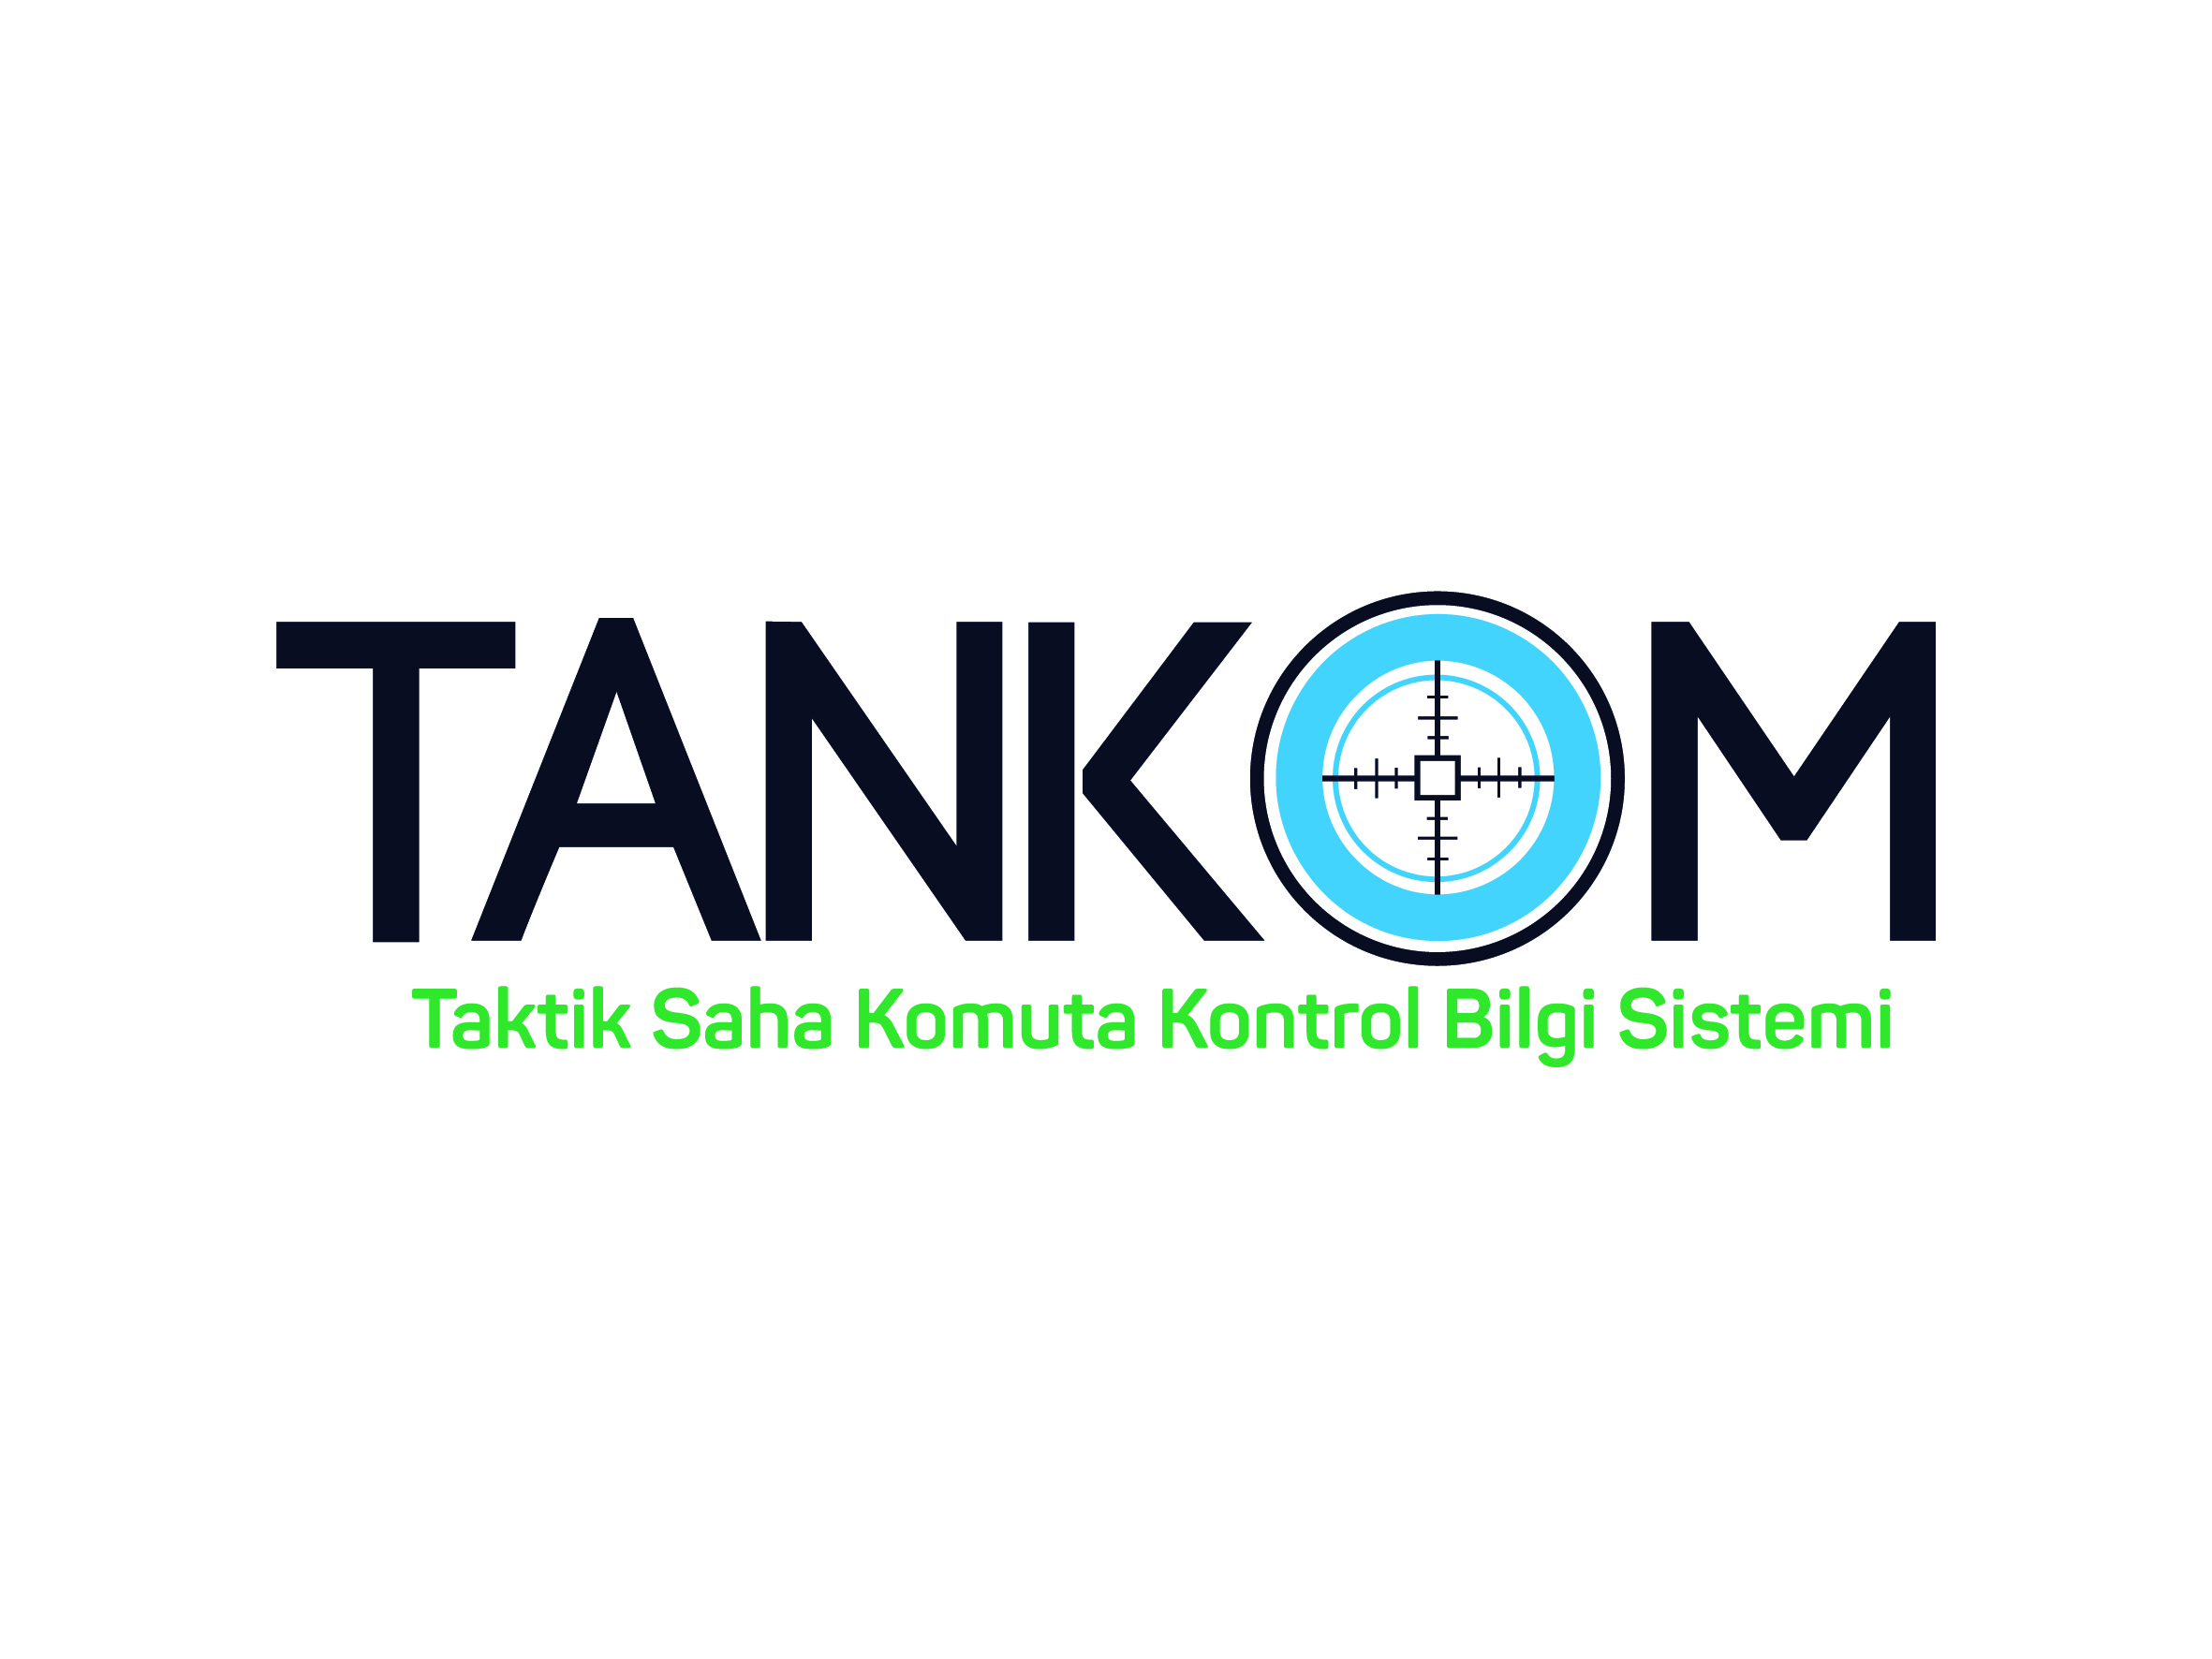 TANKOM Logotype 01 020118 01